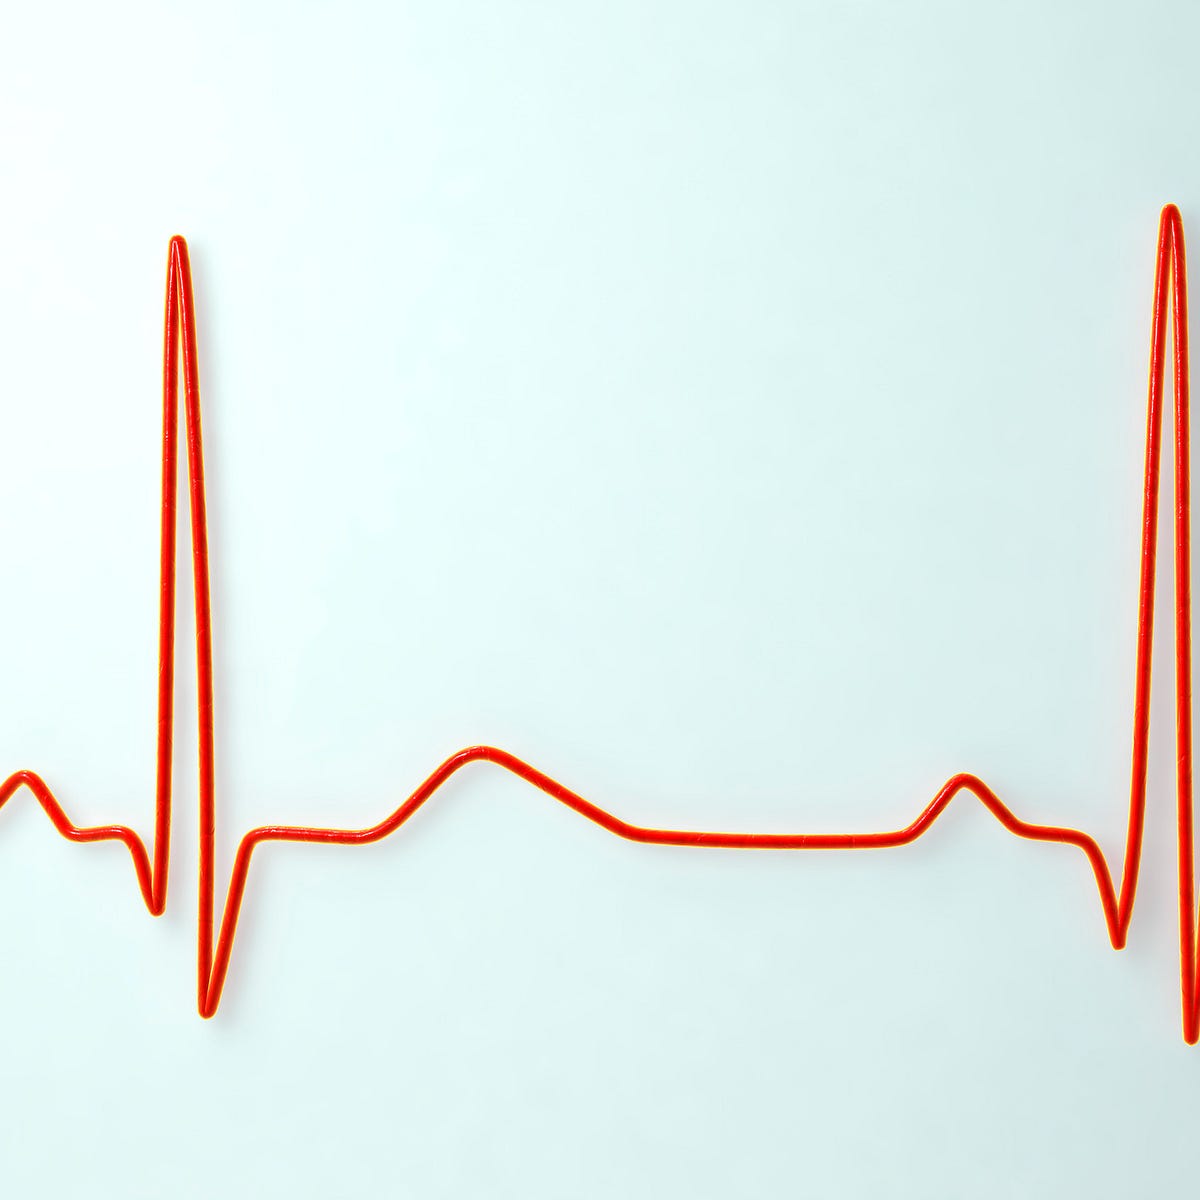 Heart Watch Fundamentals Explained